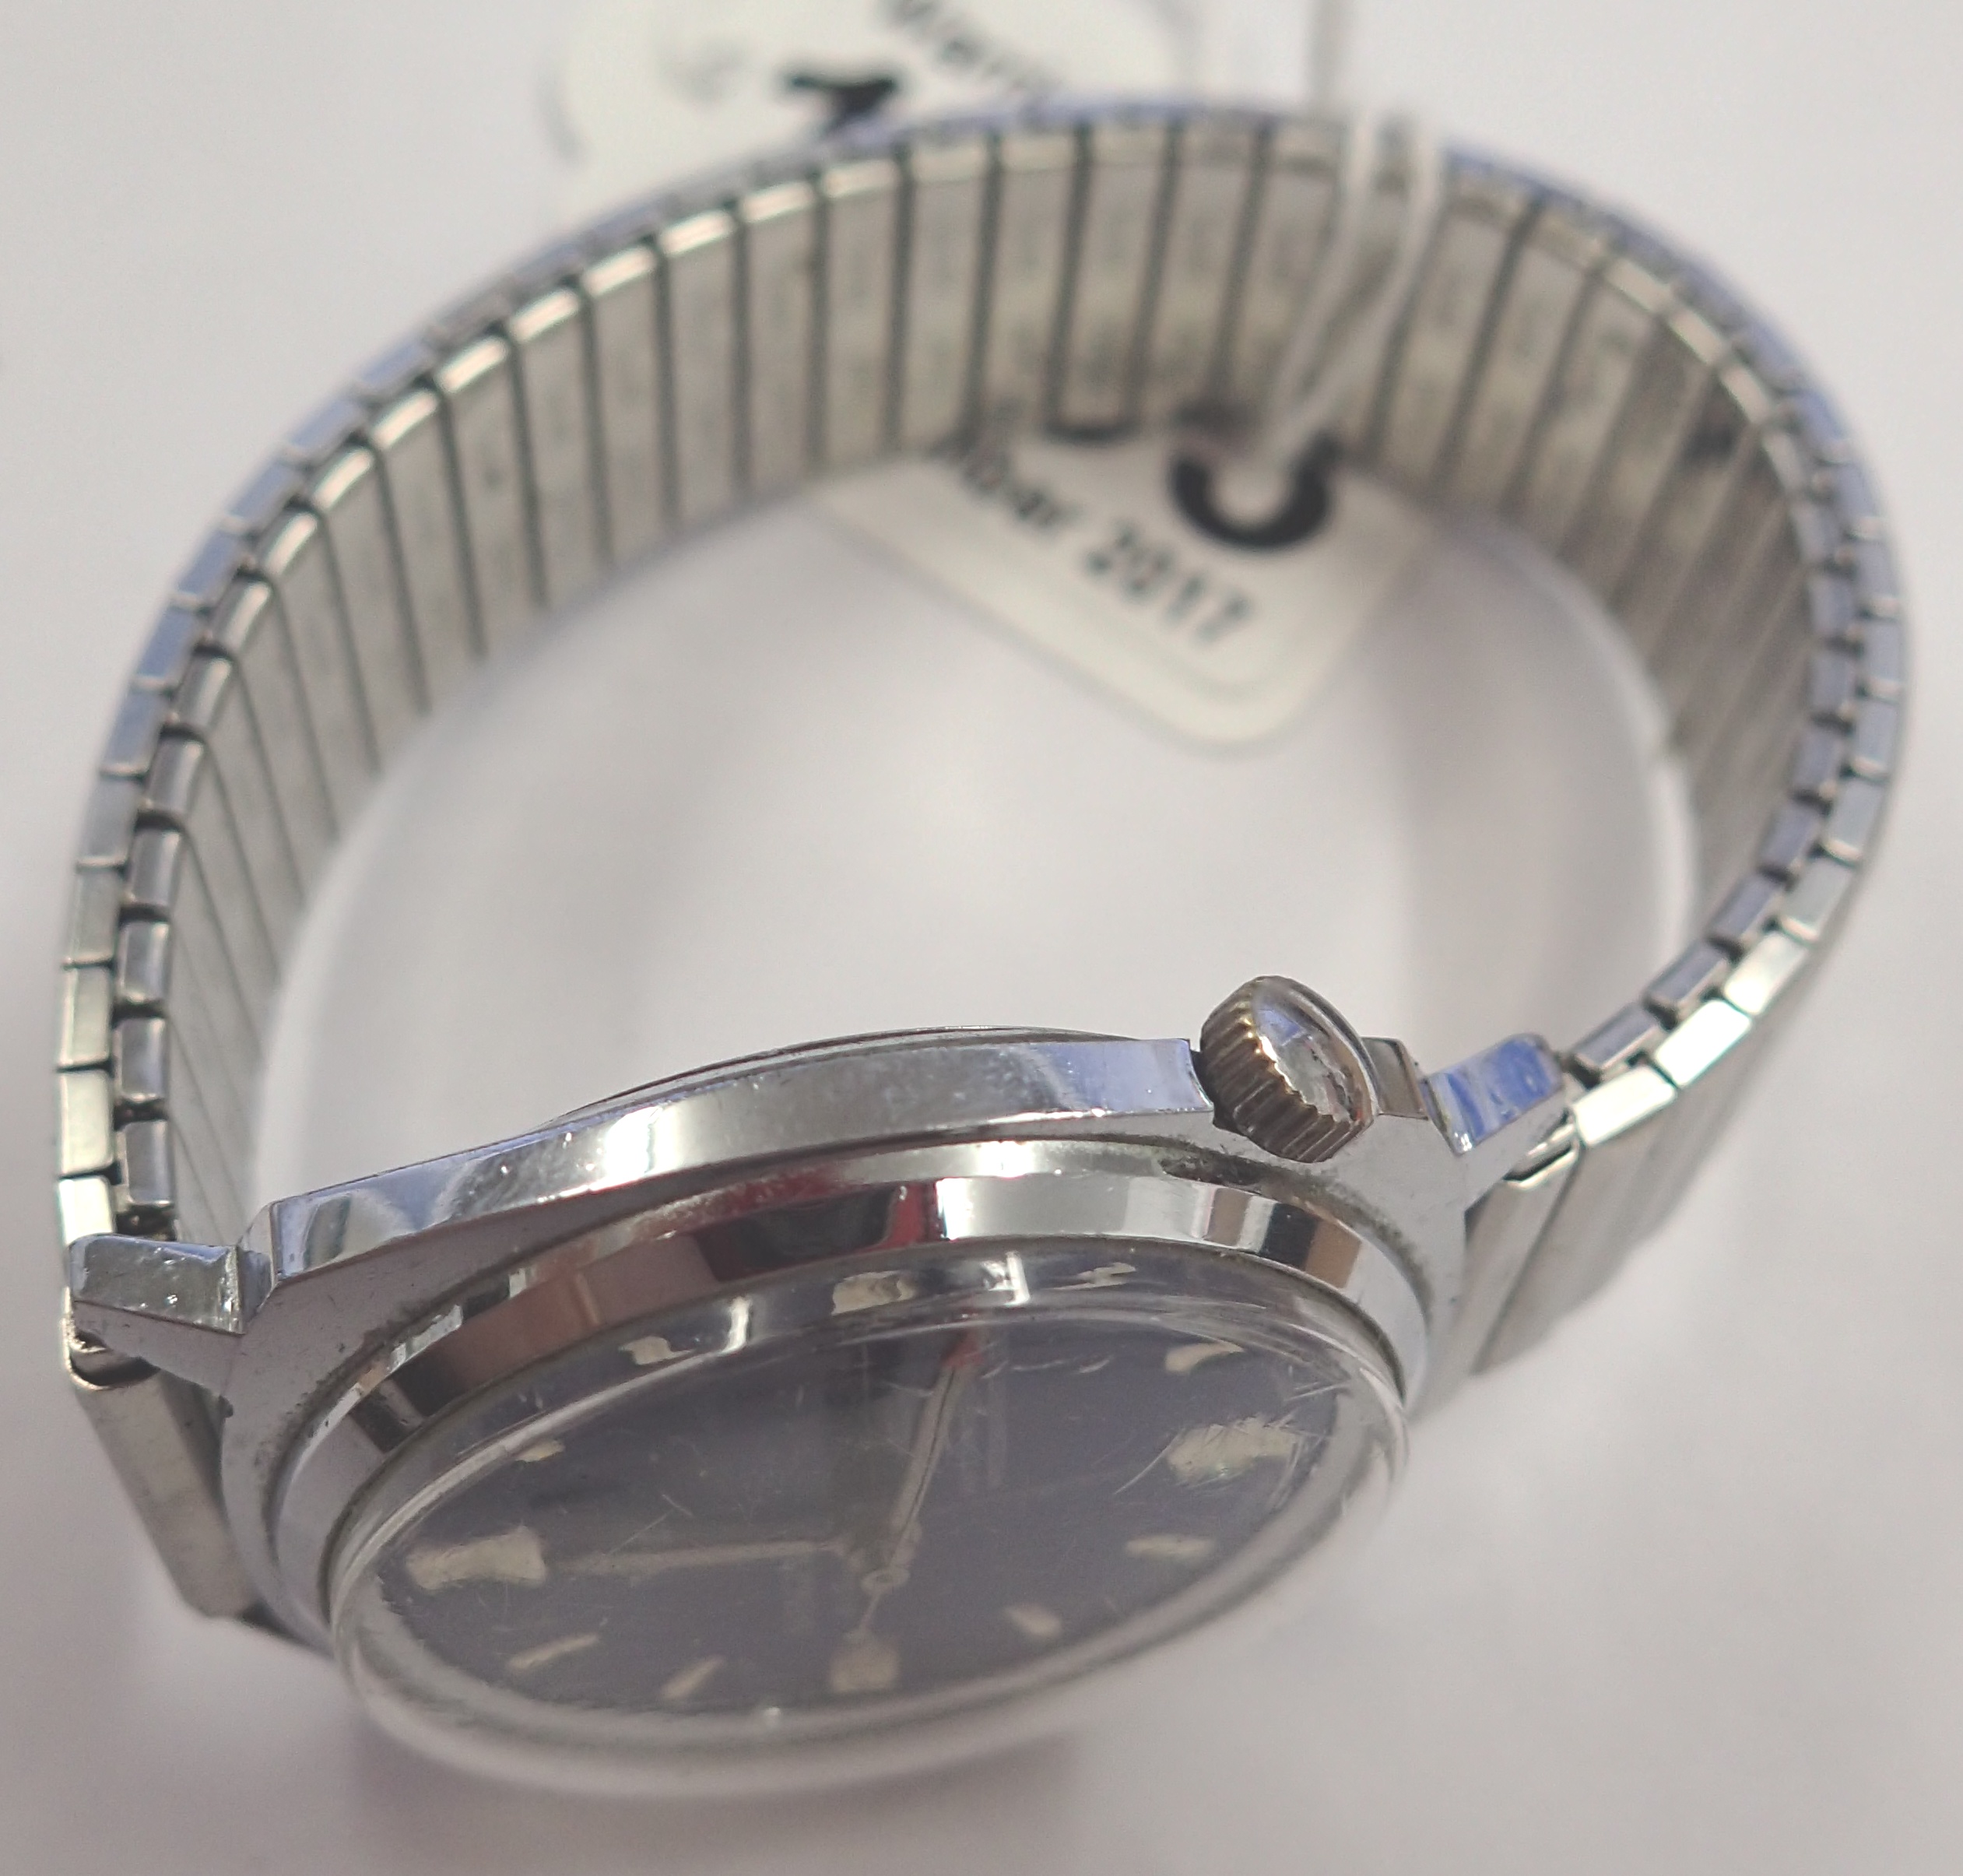 Avenger De Luxe gents mechanical wristwatch - Image 2 of 3